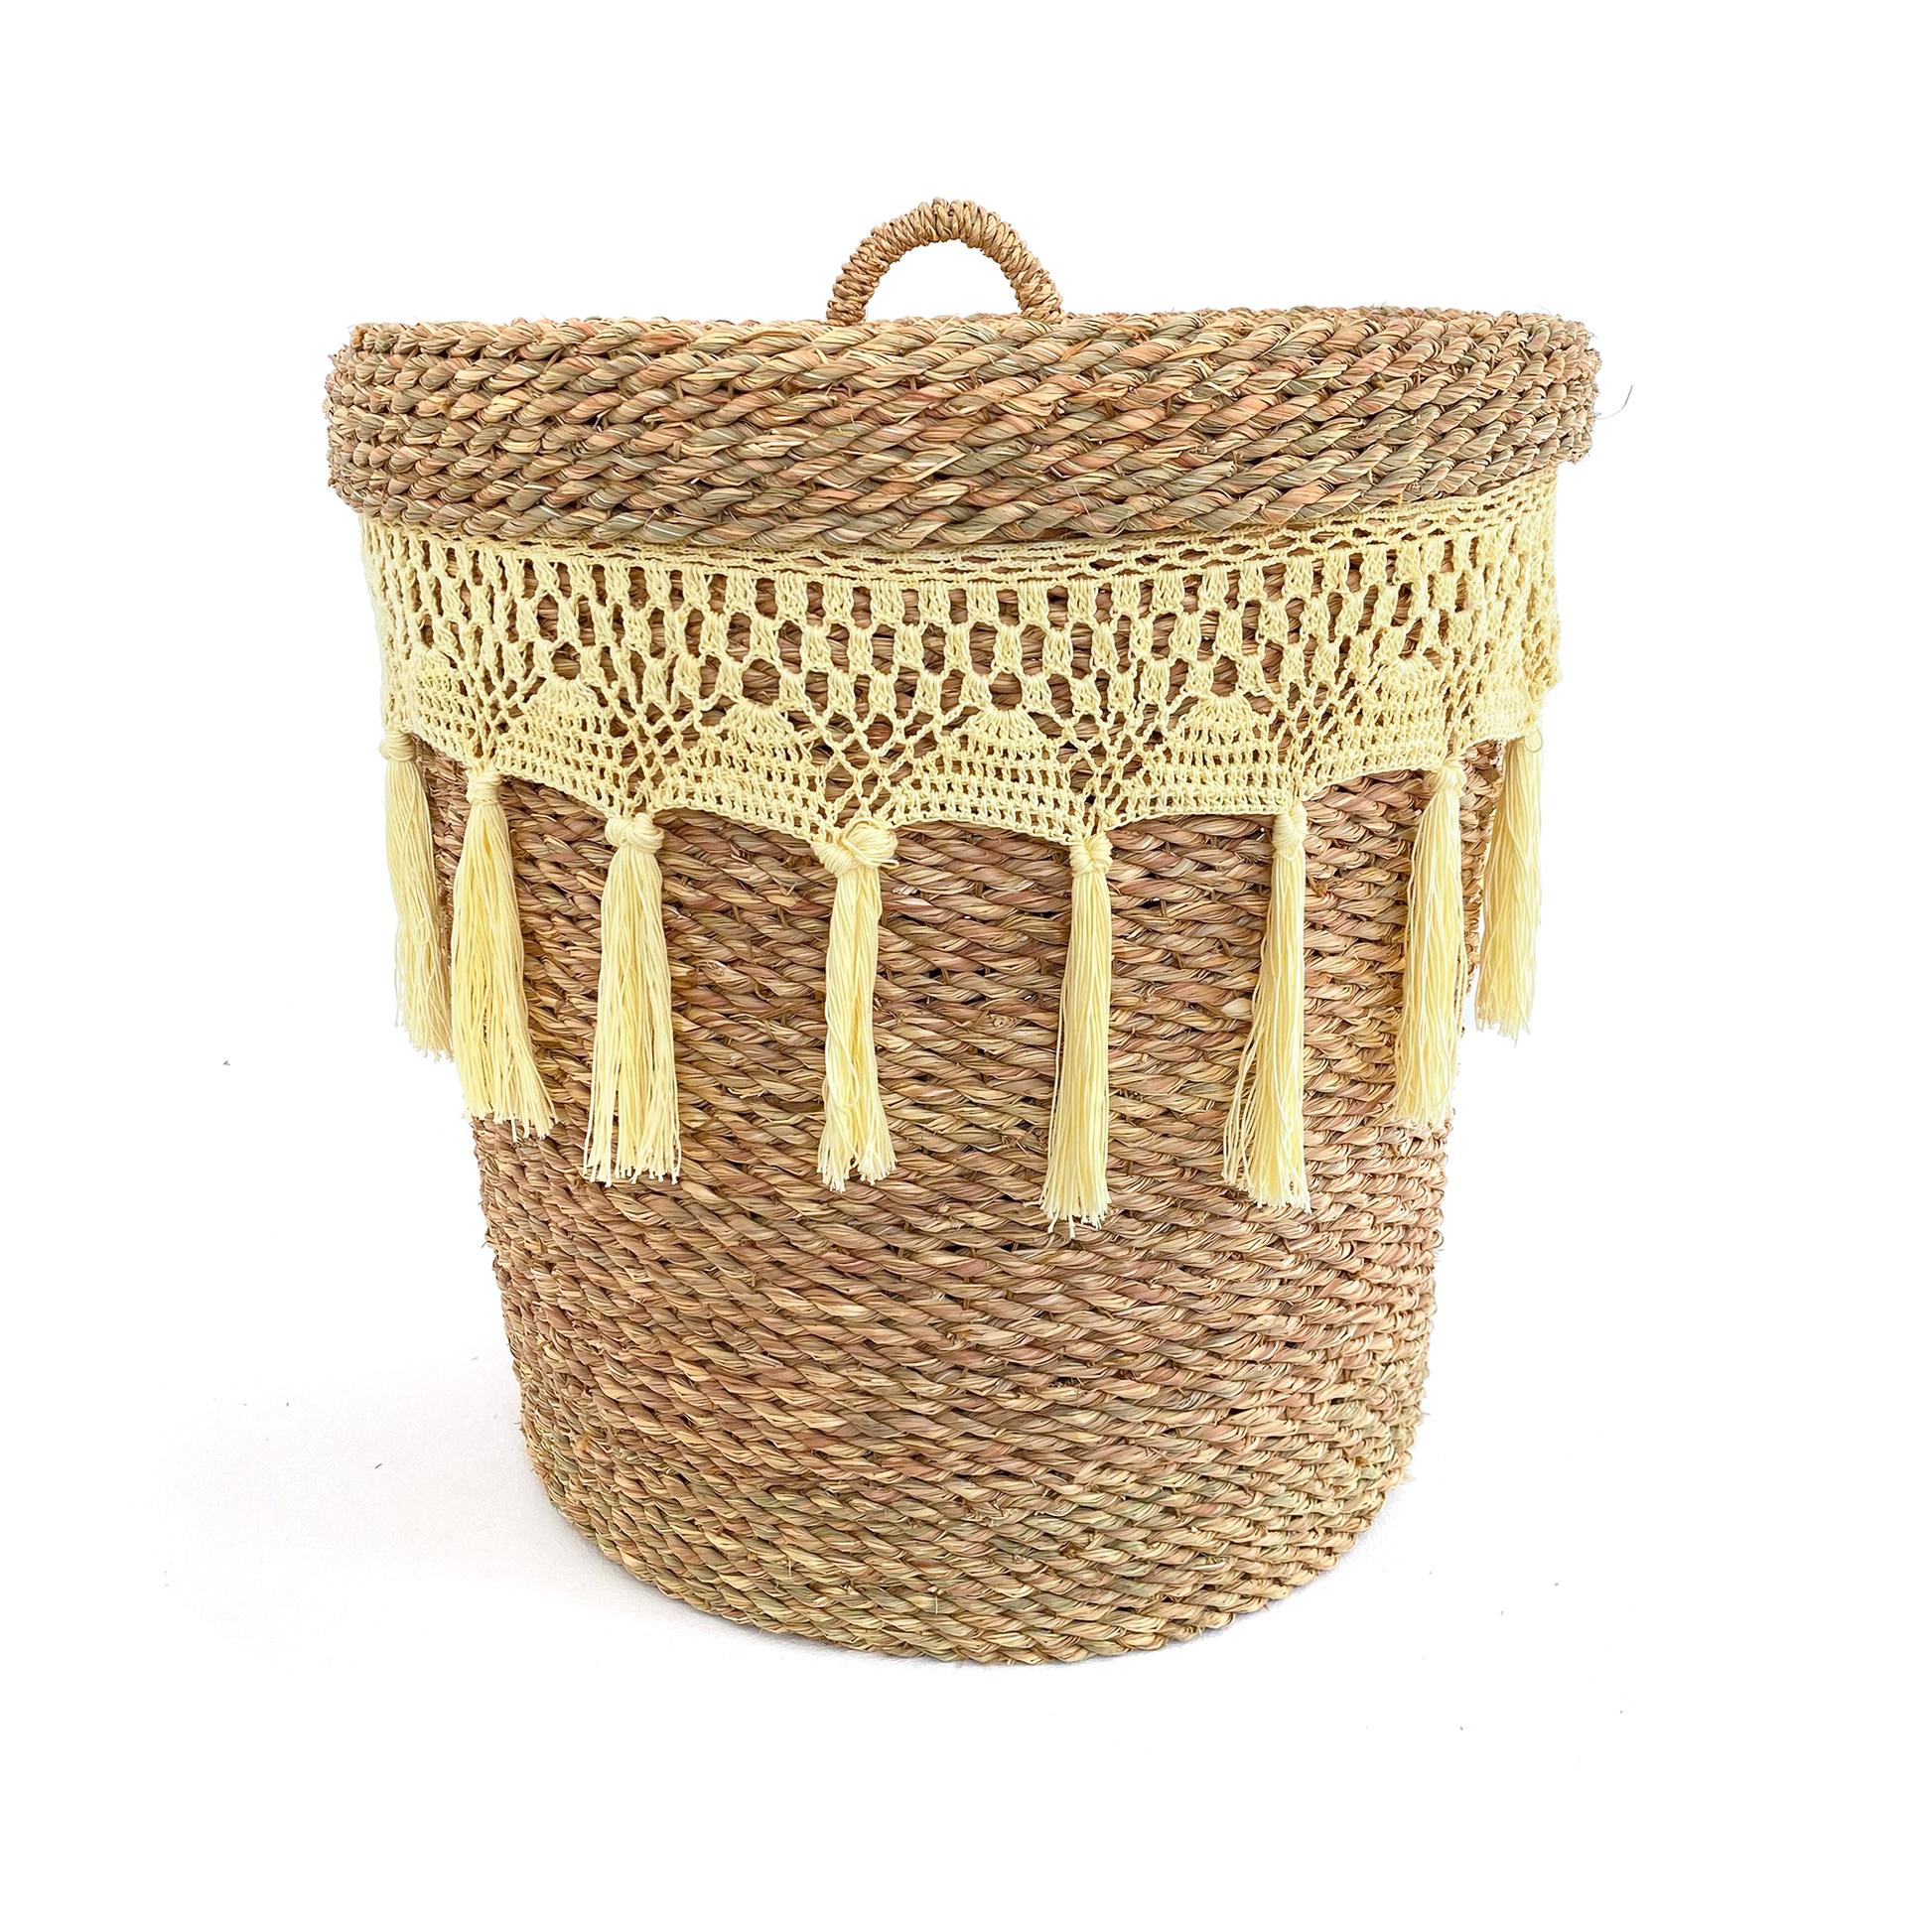 Halfa laundry basket with lid, crocheted. سلة حلفا للغسيل بغطاء مع كروشيه